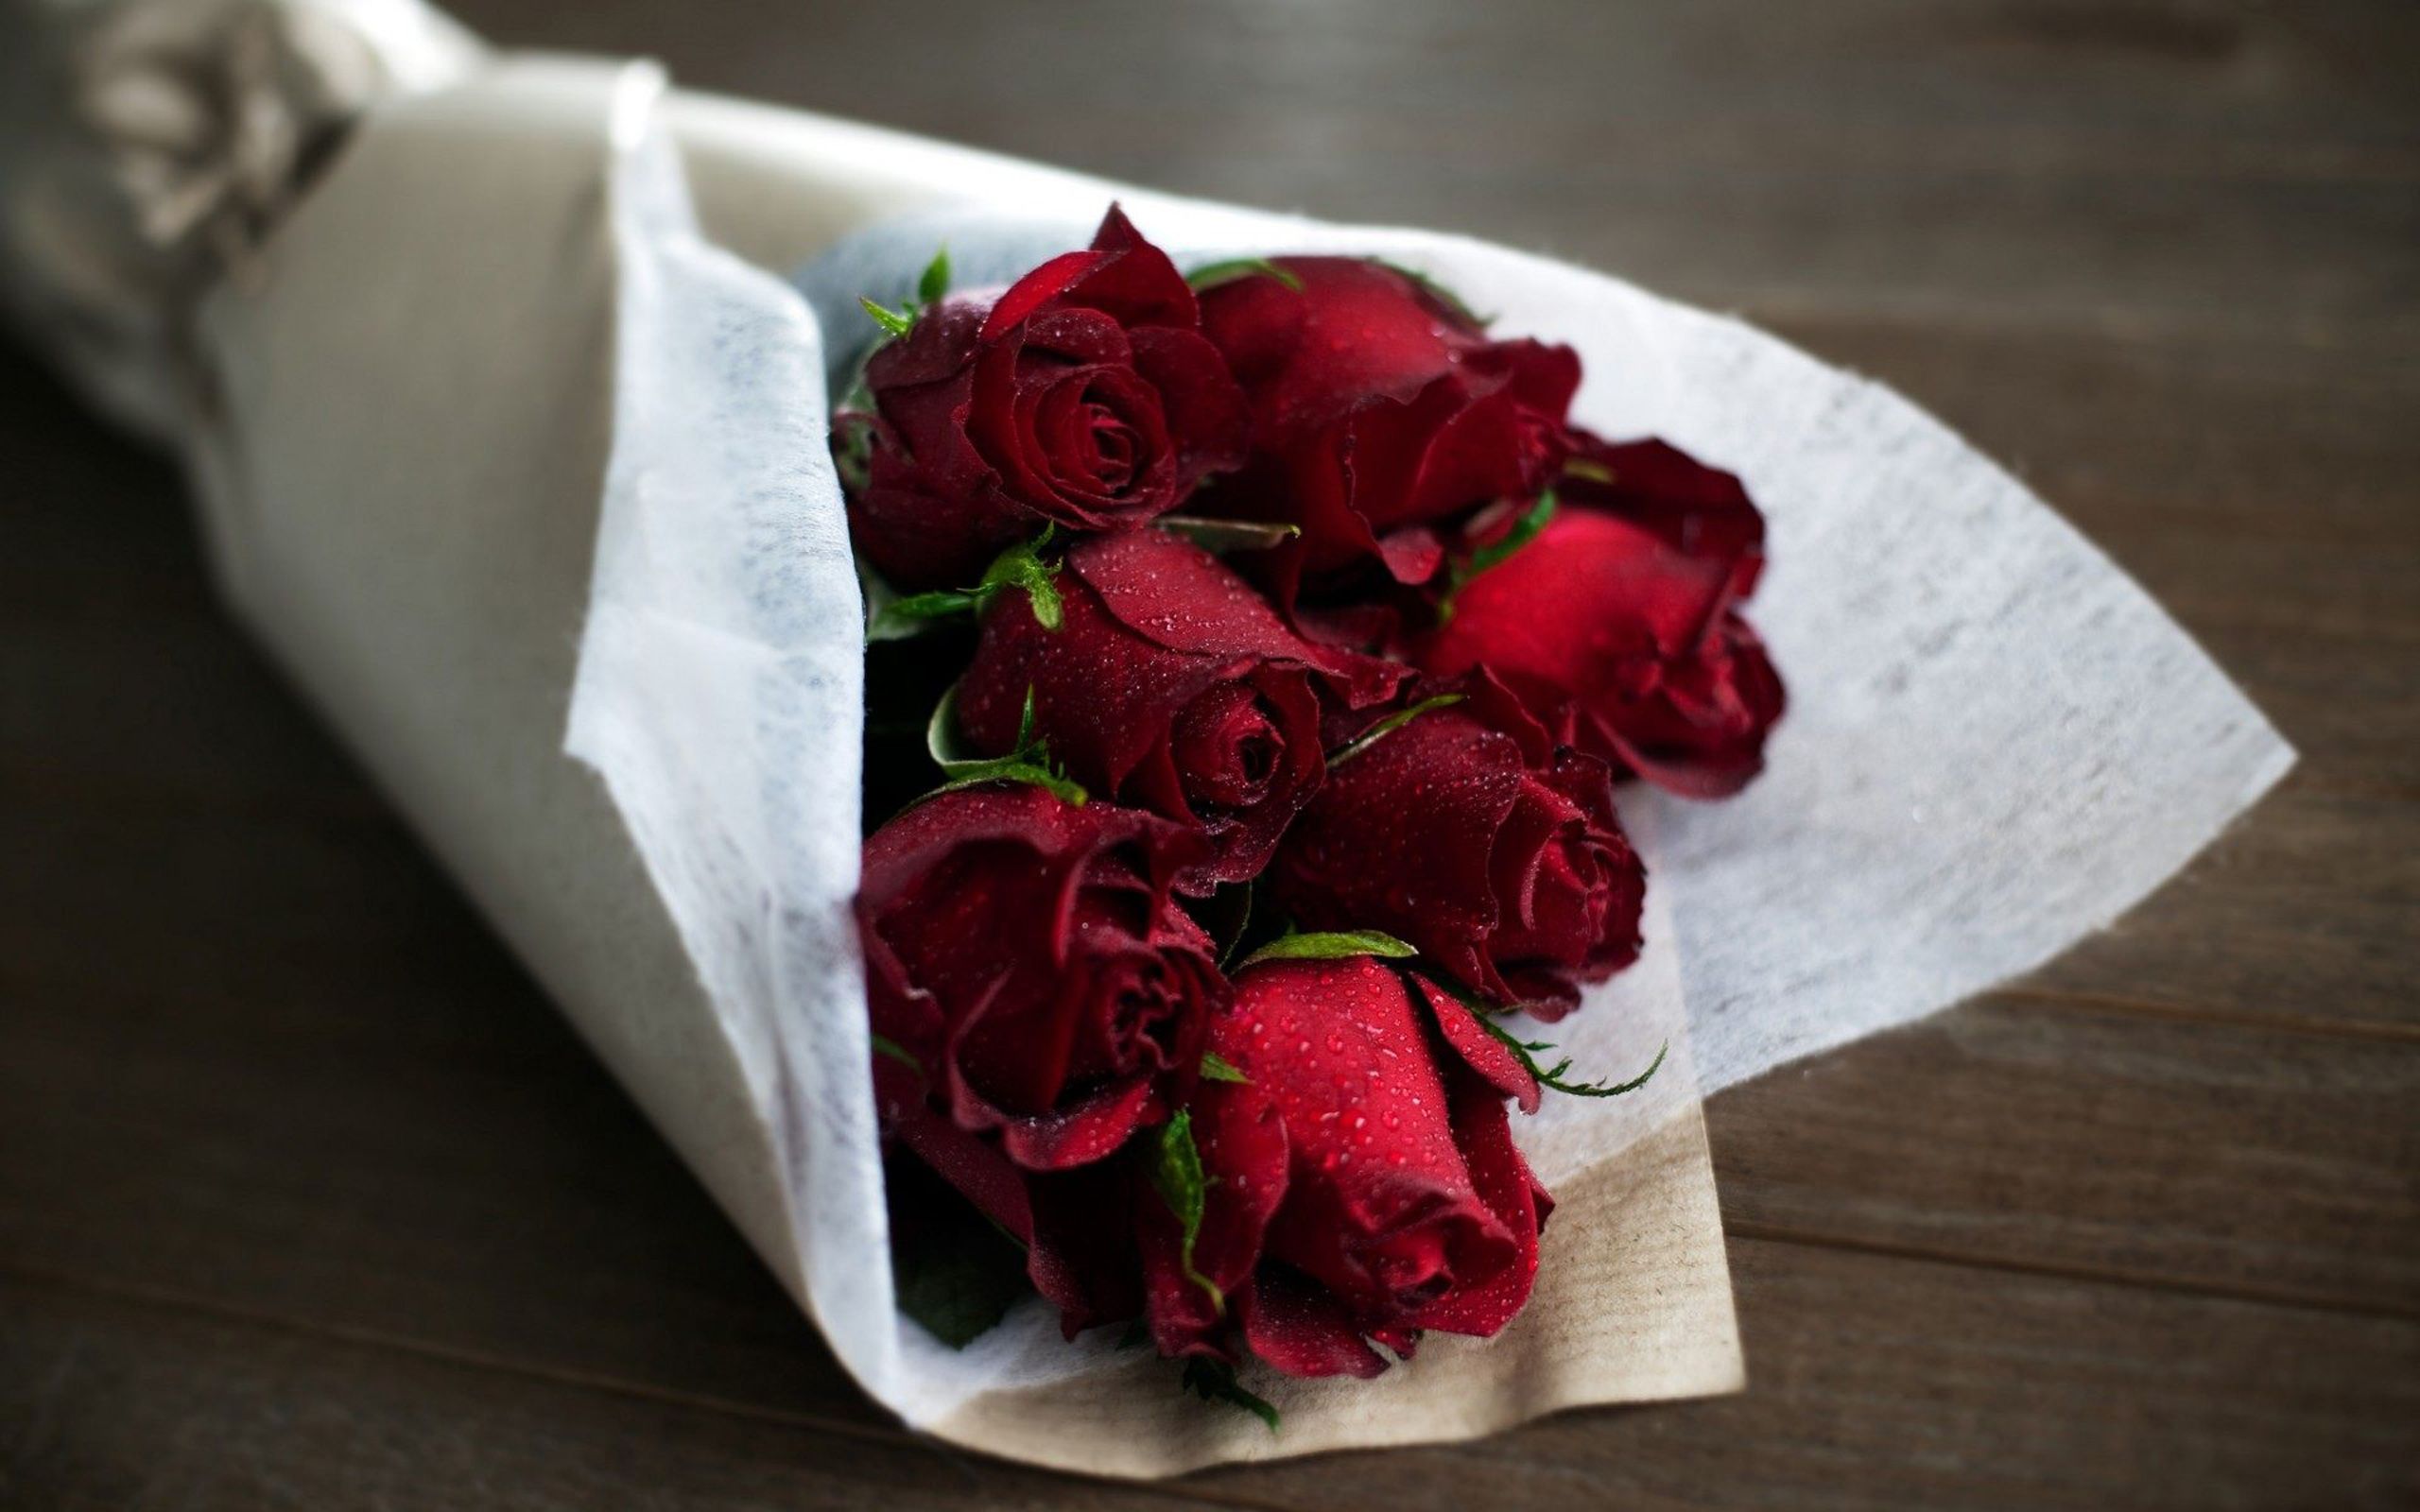 Dark Red Roses Bouquet